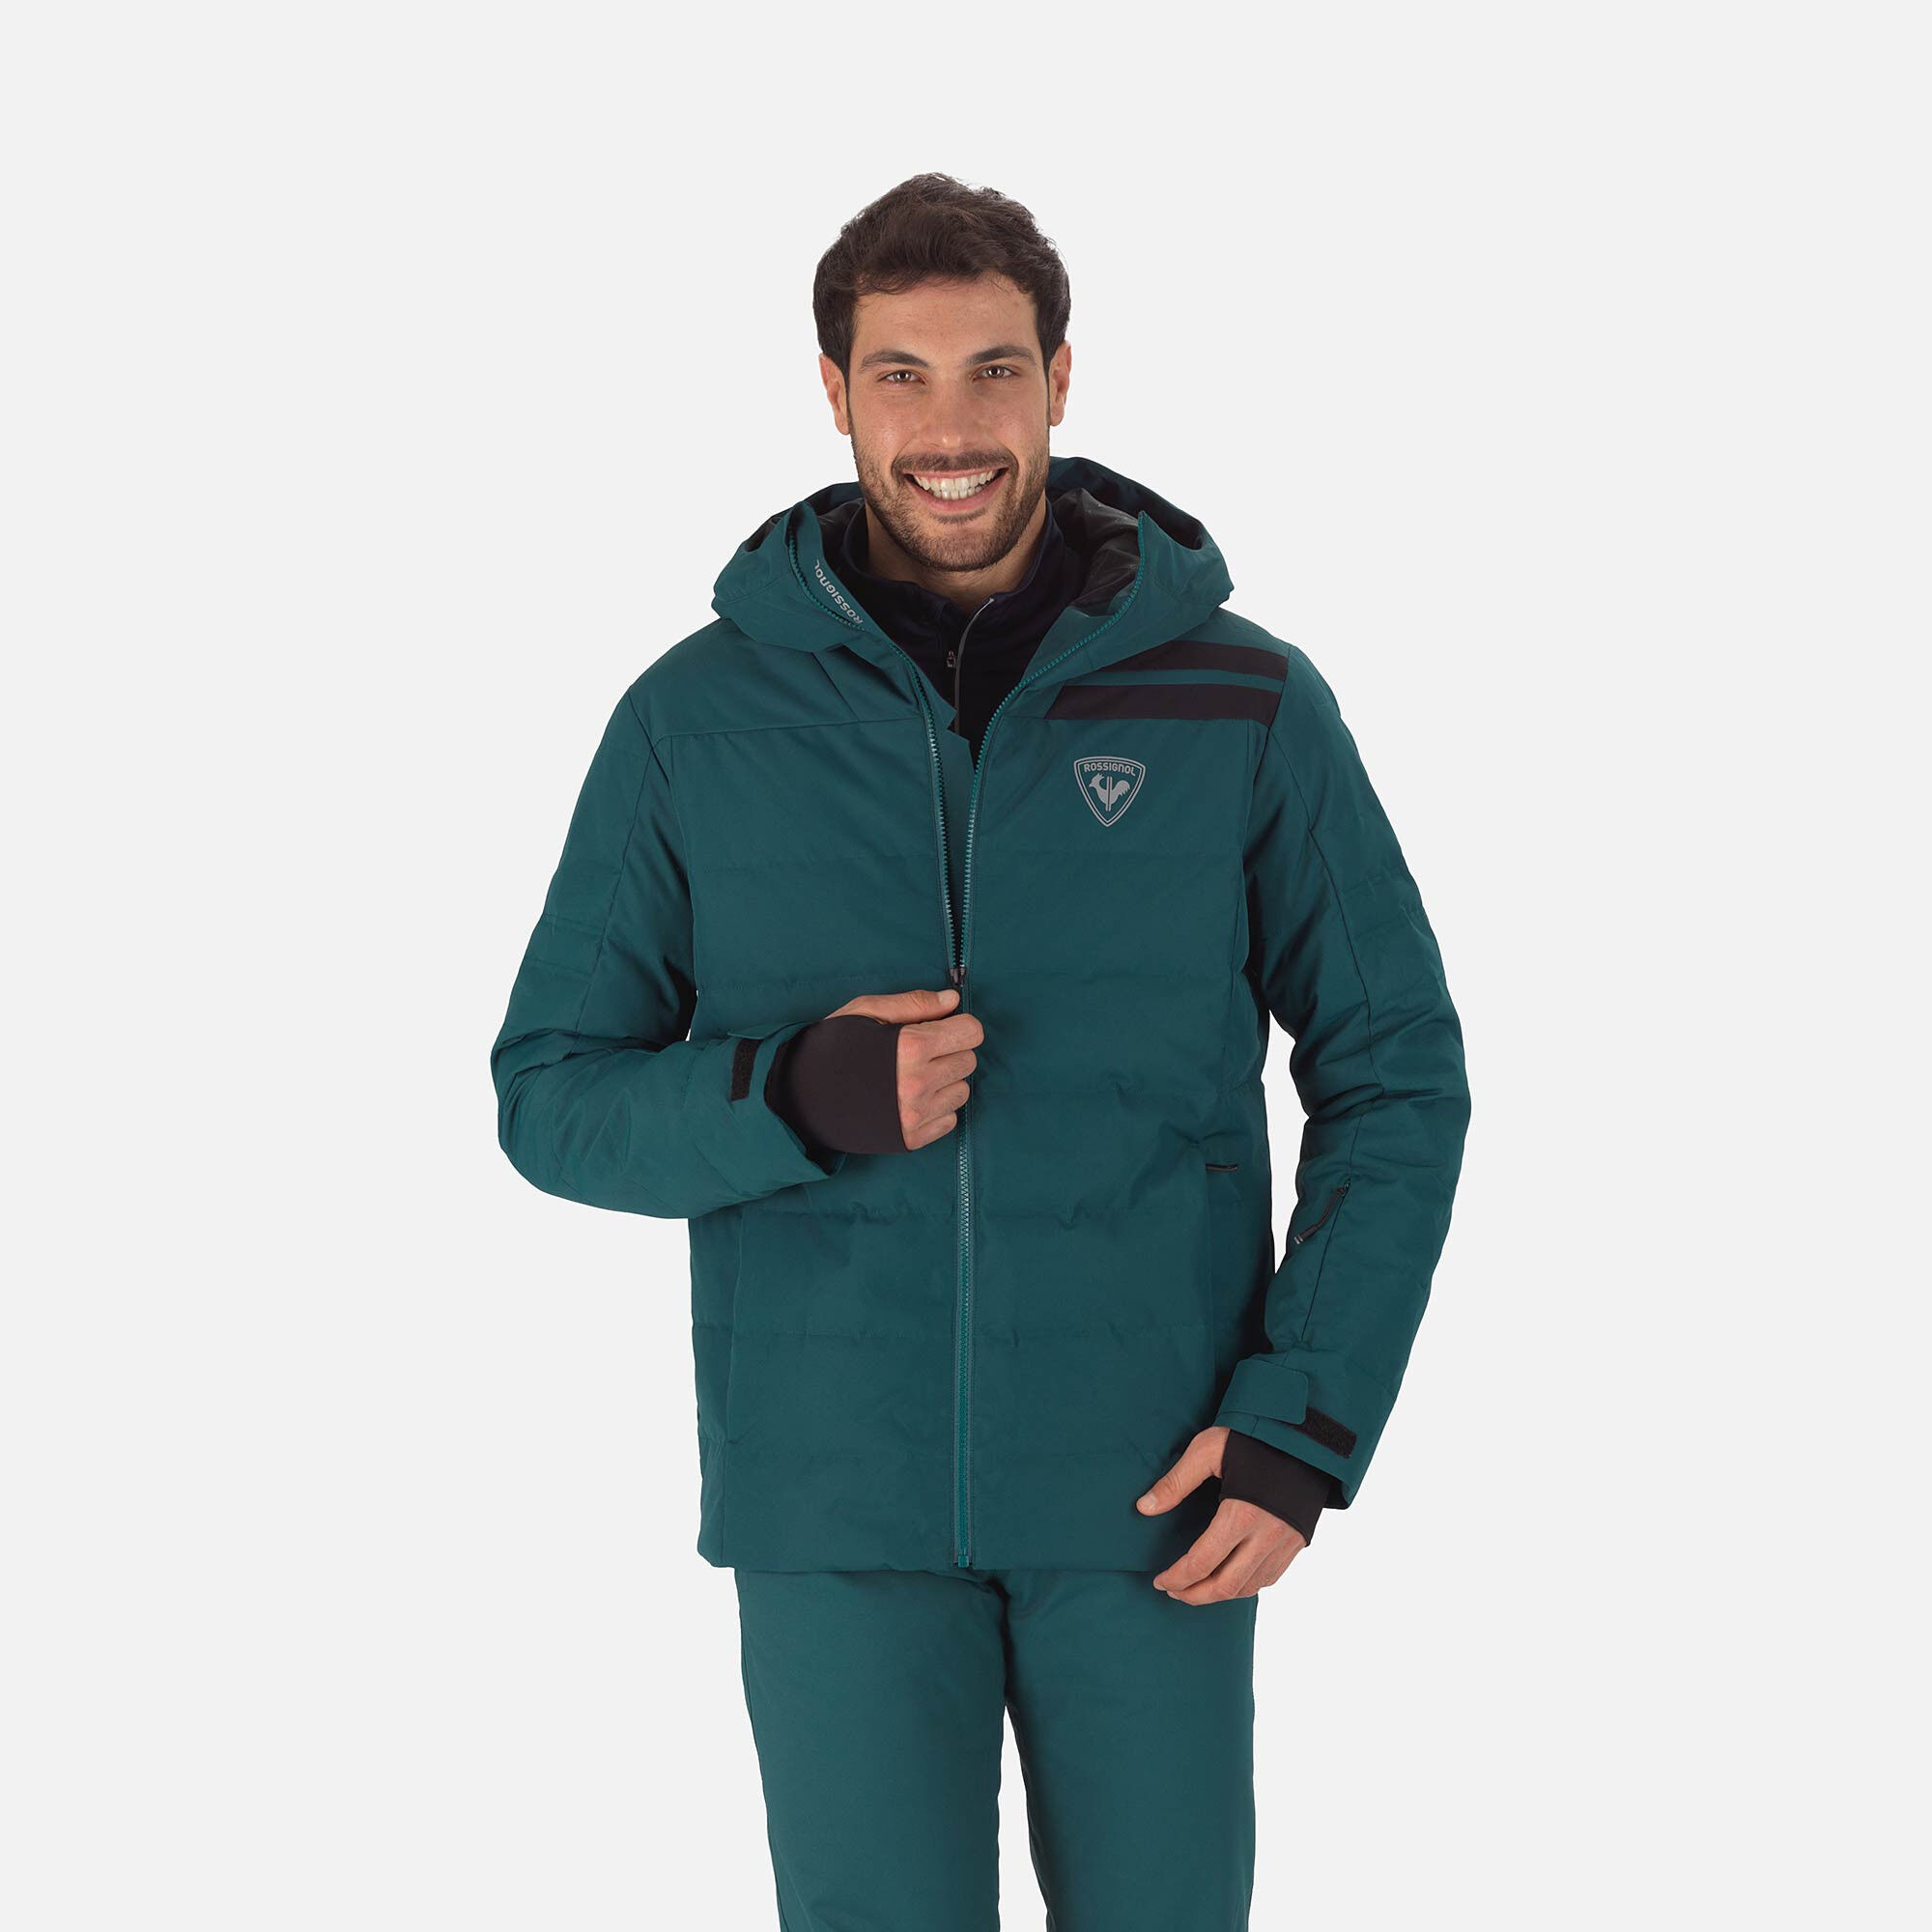 Rossignol Rapide Jacket - Ski jacket - Men's